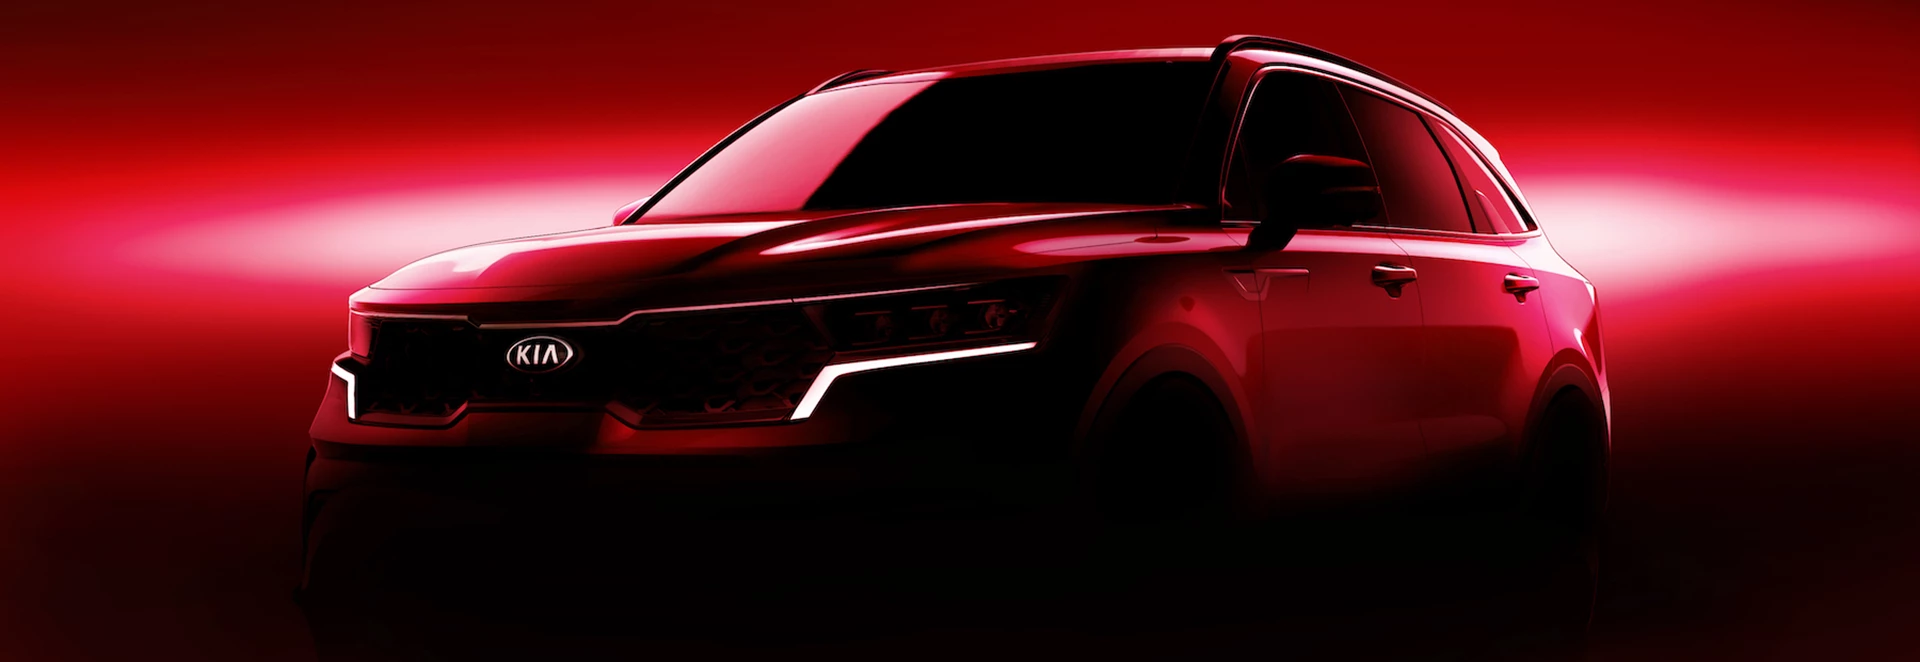 New 2020 Kia Sorento SUV ahead teased of Geneva Motor Show debut